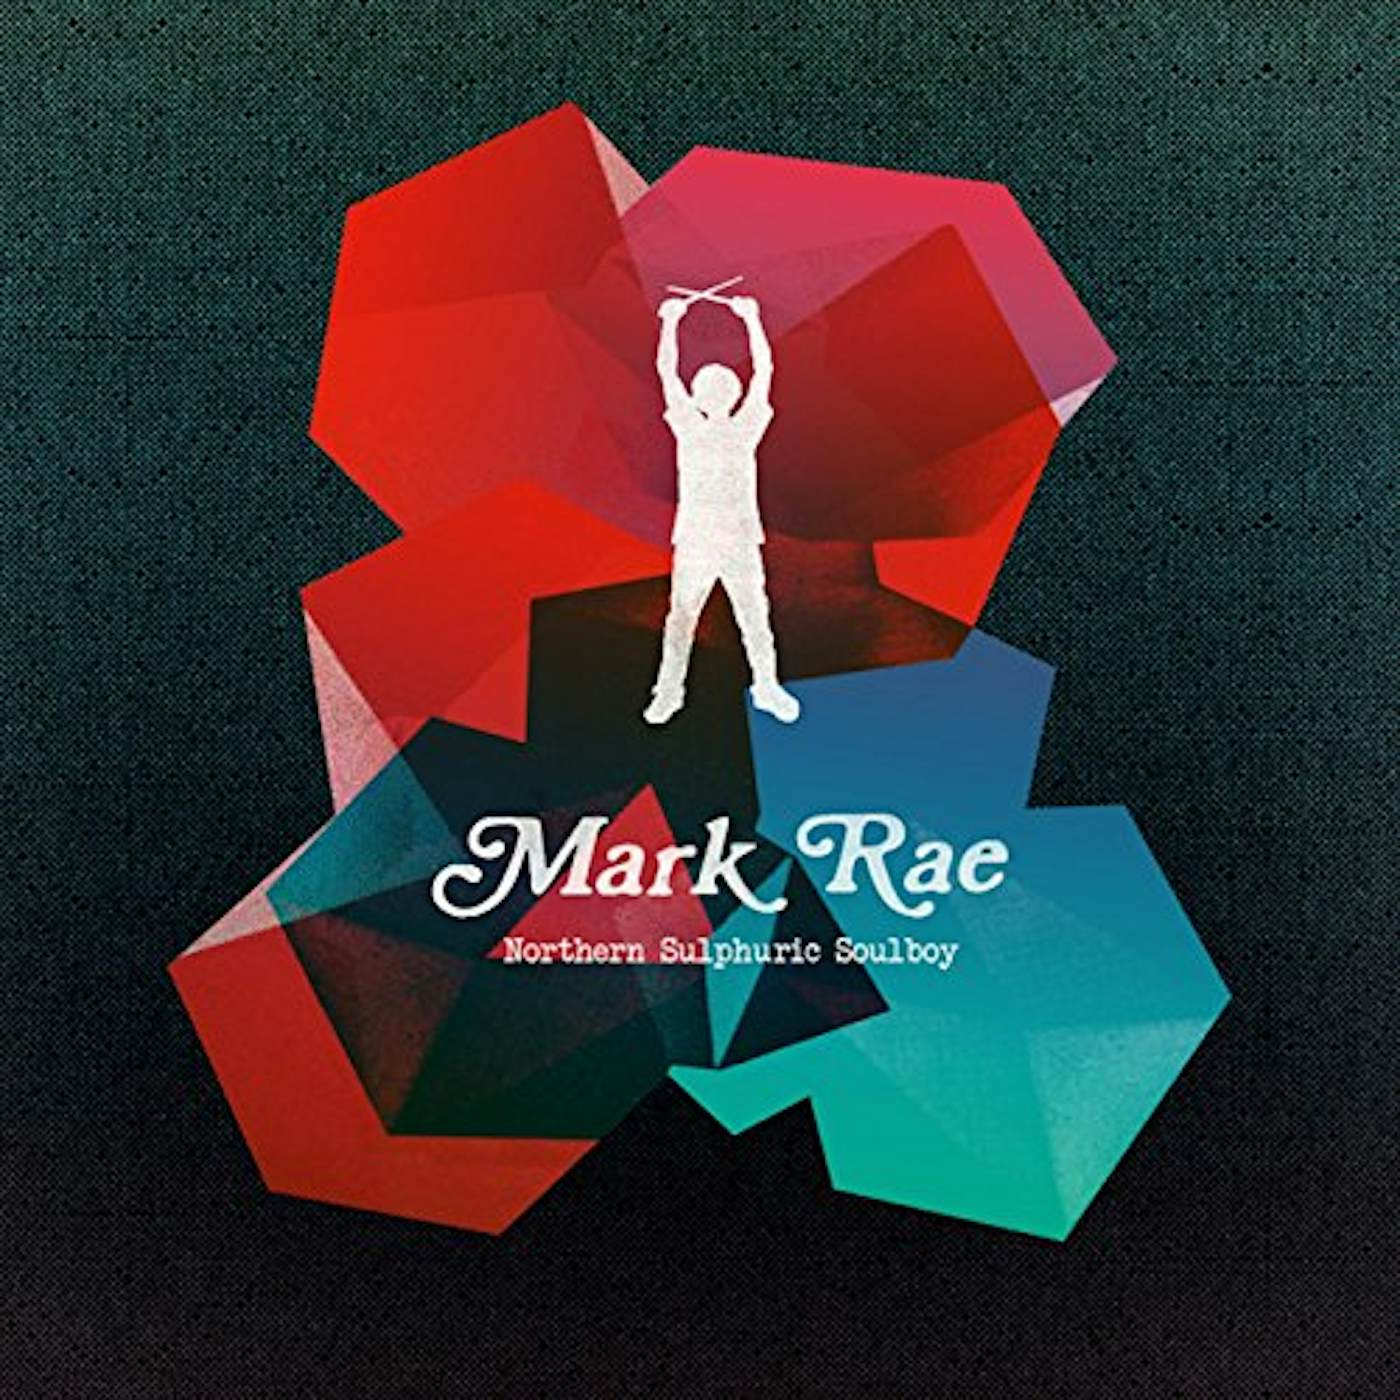 Mark Rae Northern Sulphuric Soulboy Vinyl Record